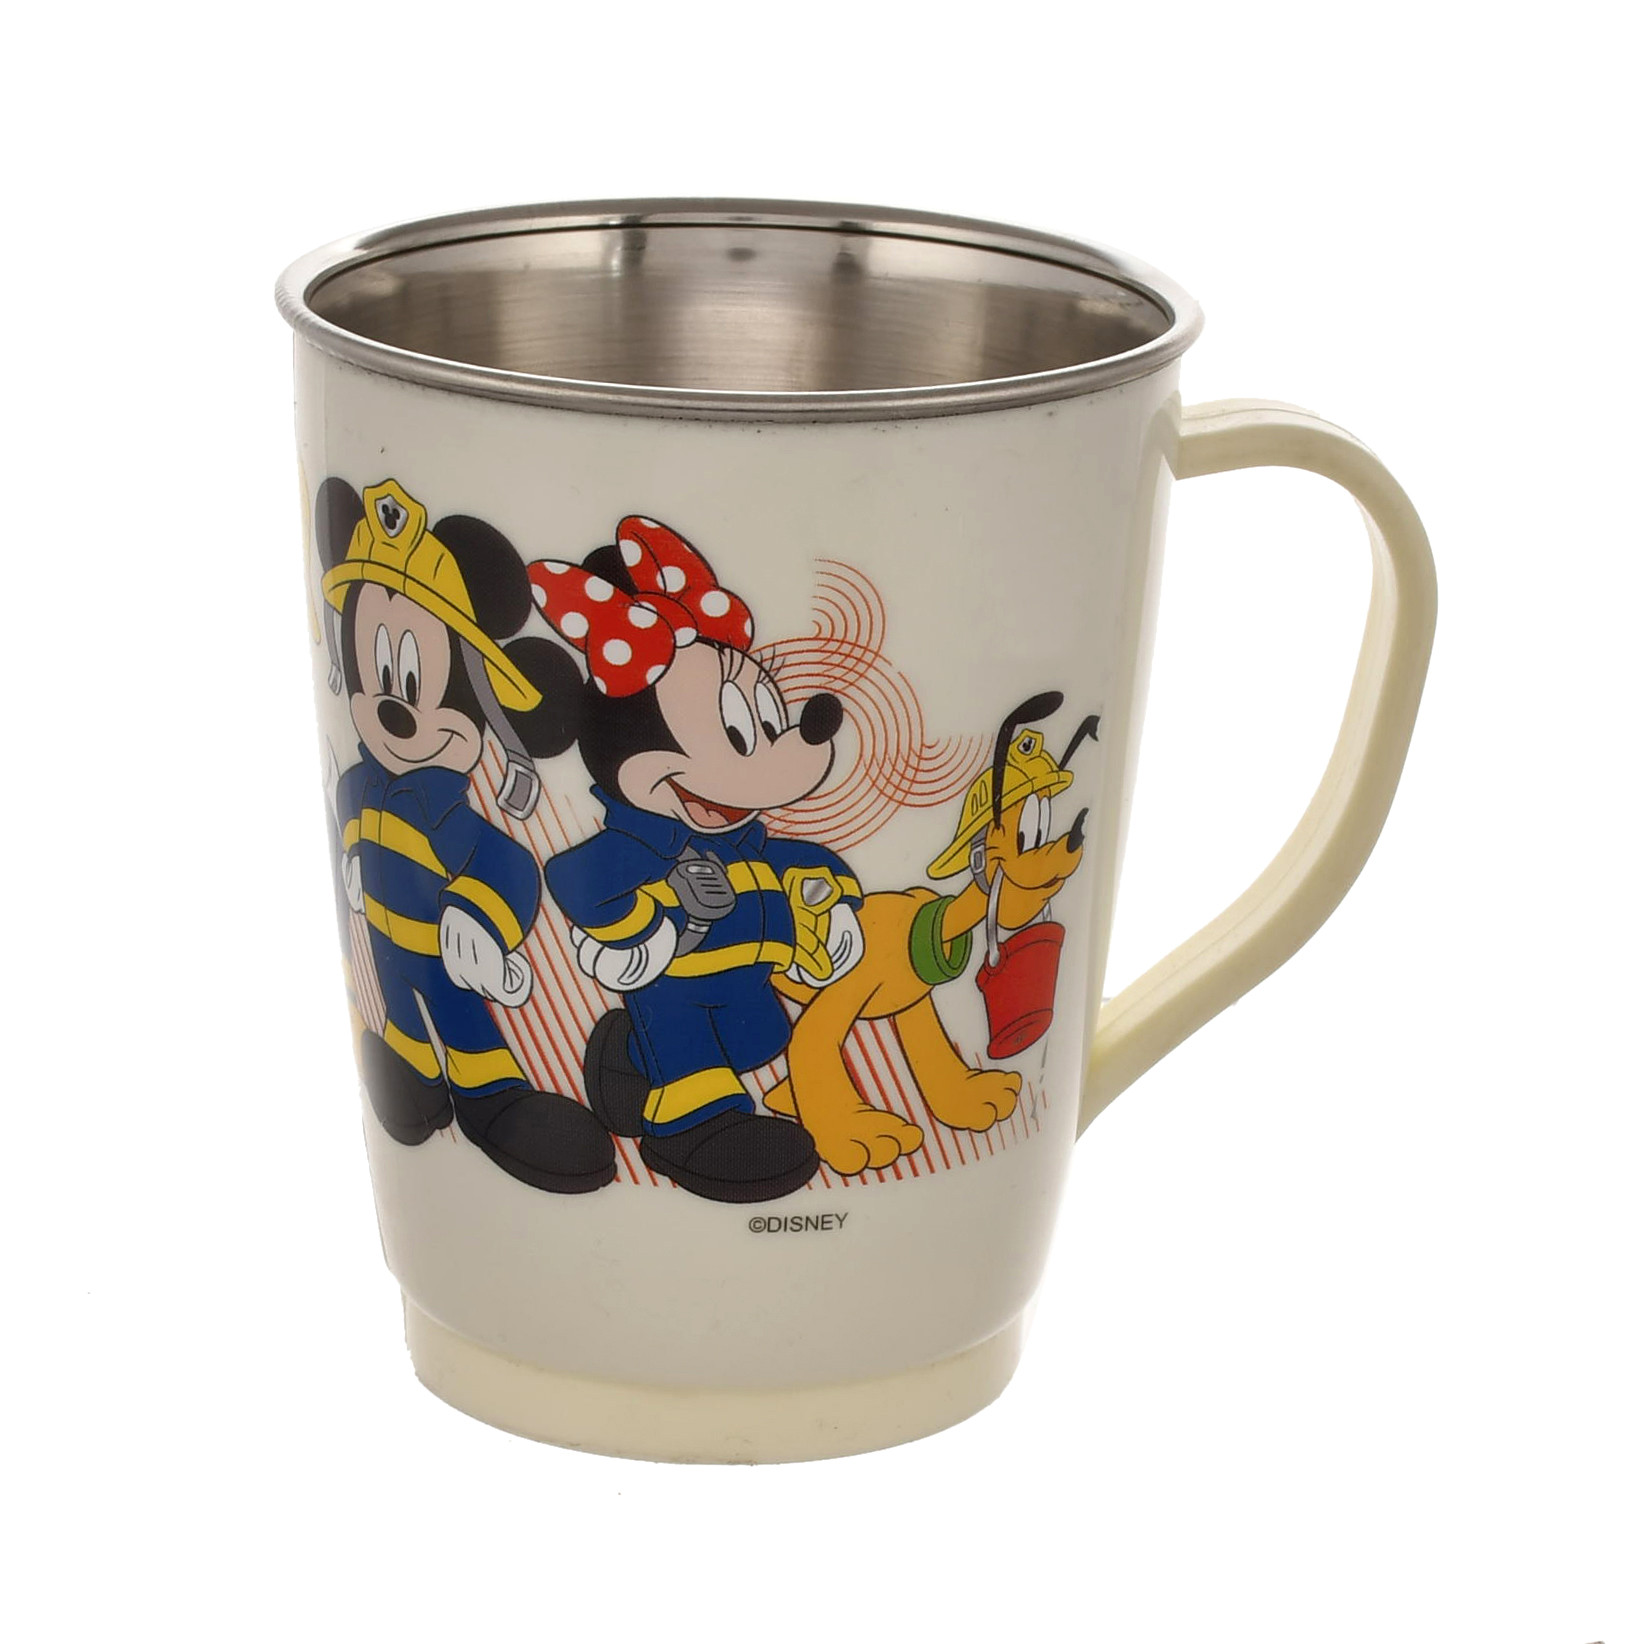 Kuber Industries Disney Printed Food Grade BPA Free Tea/Coffee Mug for Coffee Tea Cocoa, Camping Mugs with Lid, Pack of 2 (Grey & Cream)